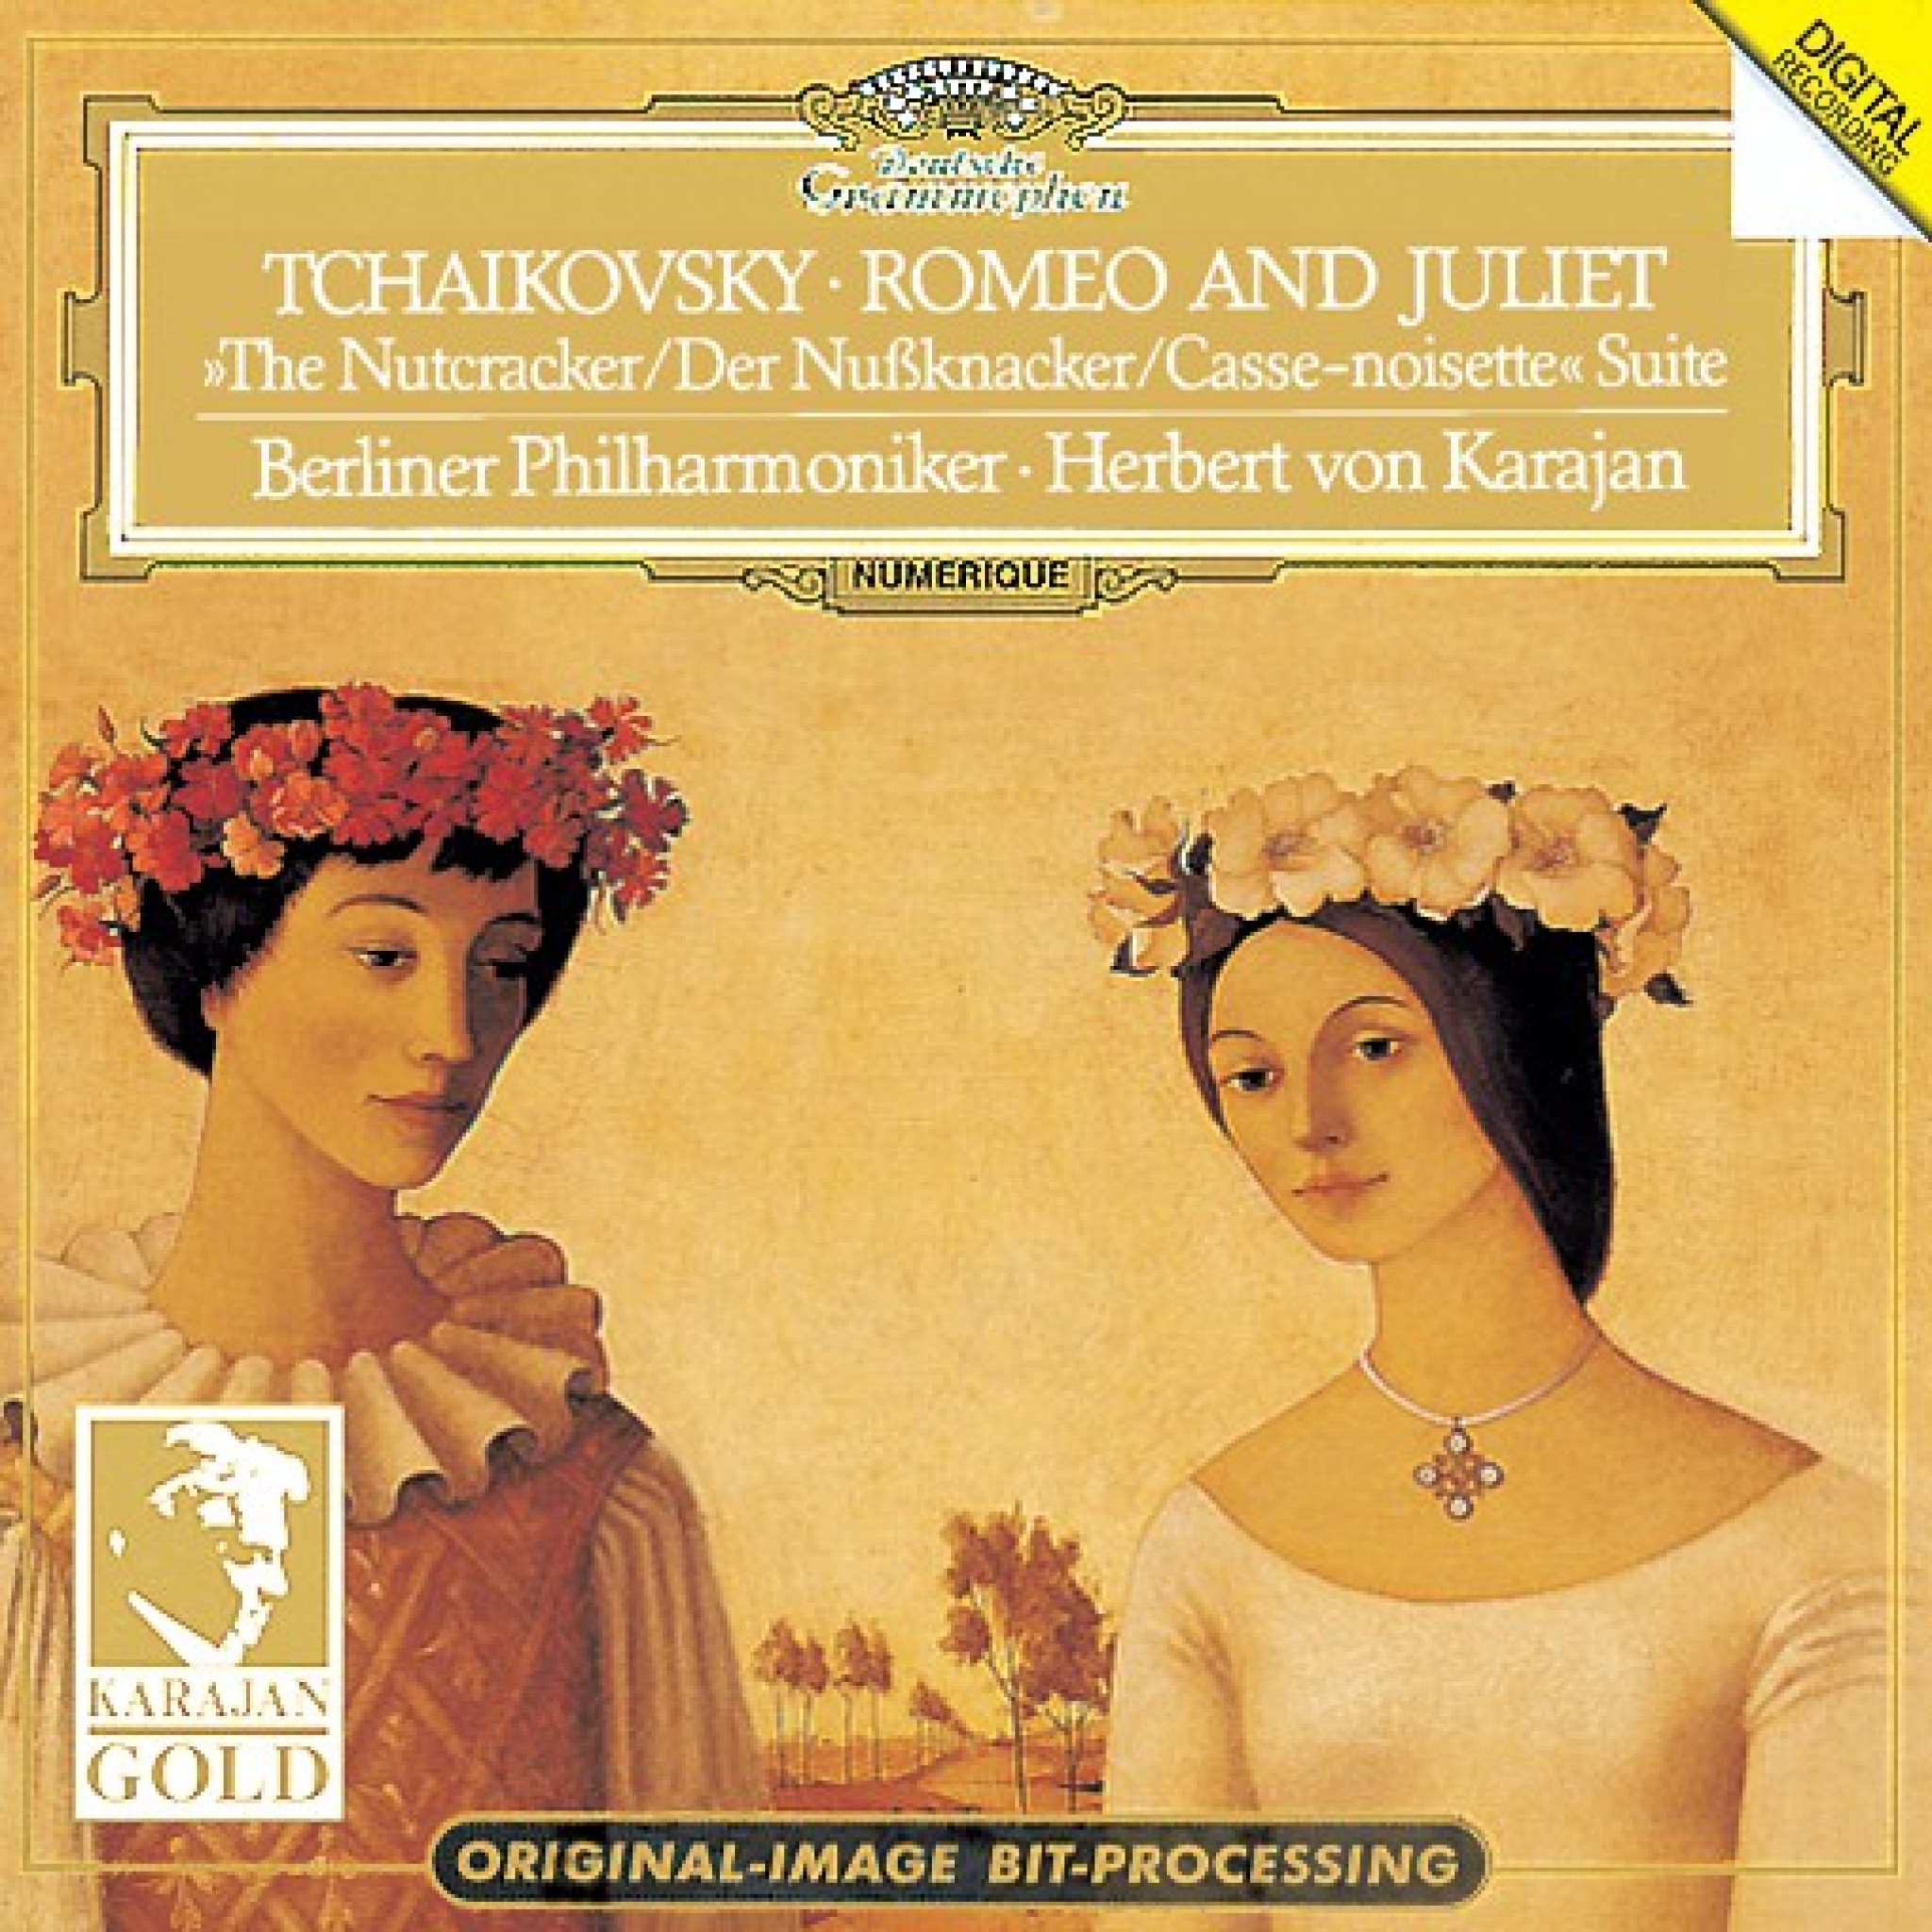 Tchaikovsky Karajan Gold Cover 00028943902120